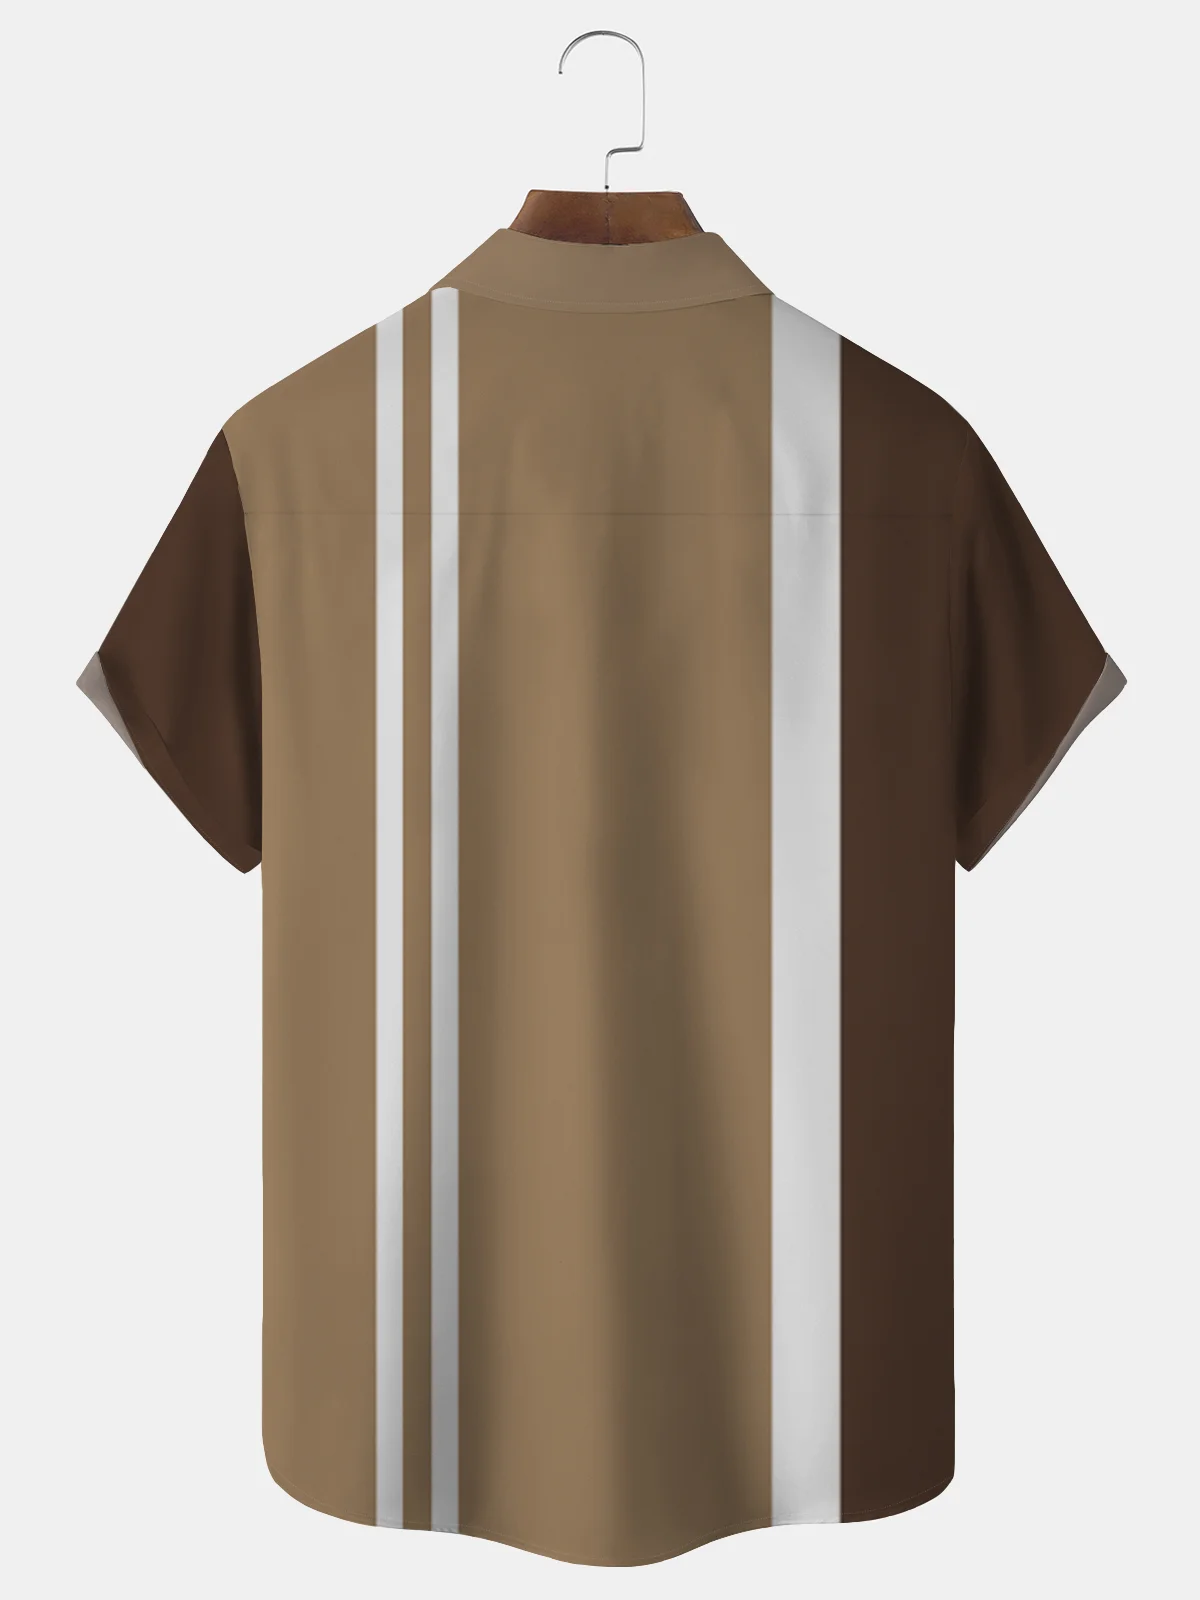 Royaura 60's Retro Nostalgic Film and Television Shirts Men's Bowling Shirts Large Size Stretch Striped Camp Shirts